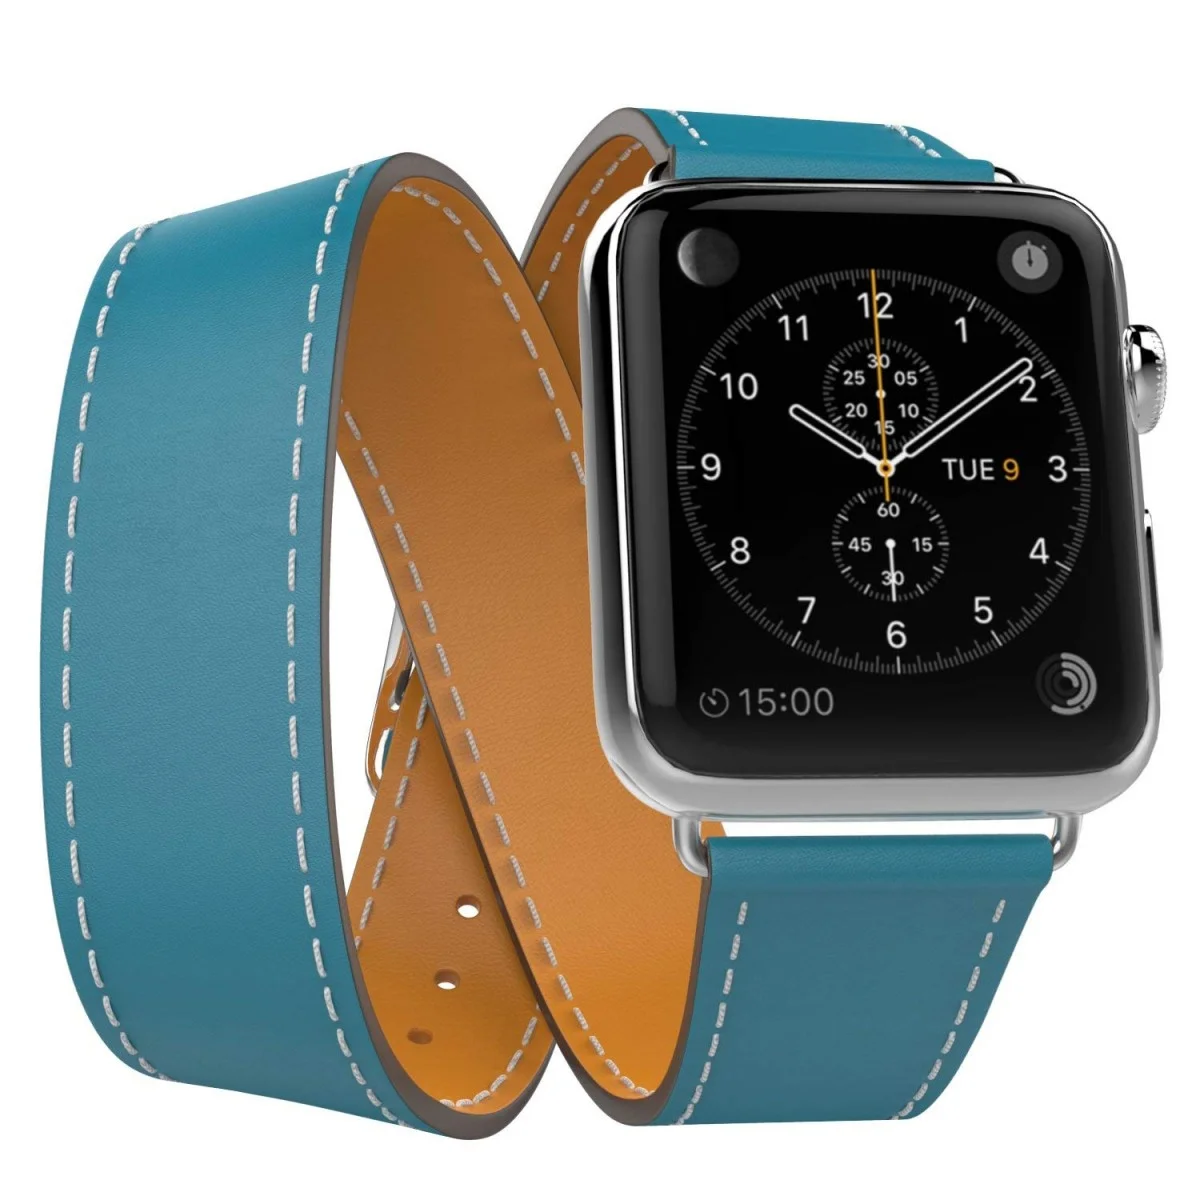 Řemínek iMore Double Tour Apple Watch Series 3/2/1 (42mm) - Modrý